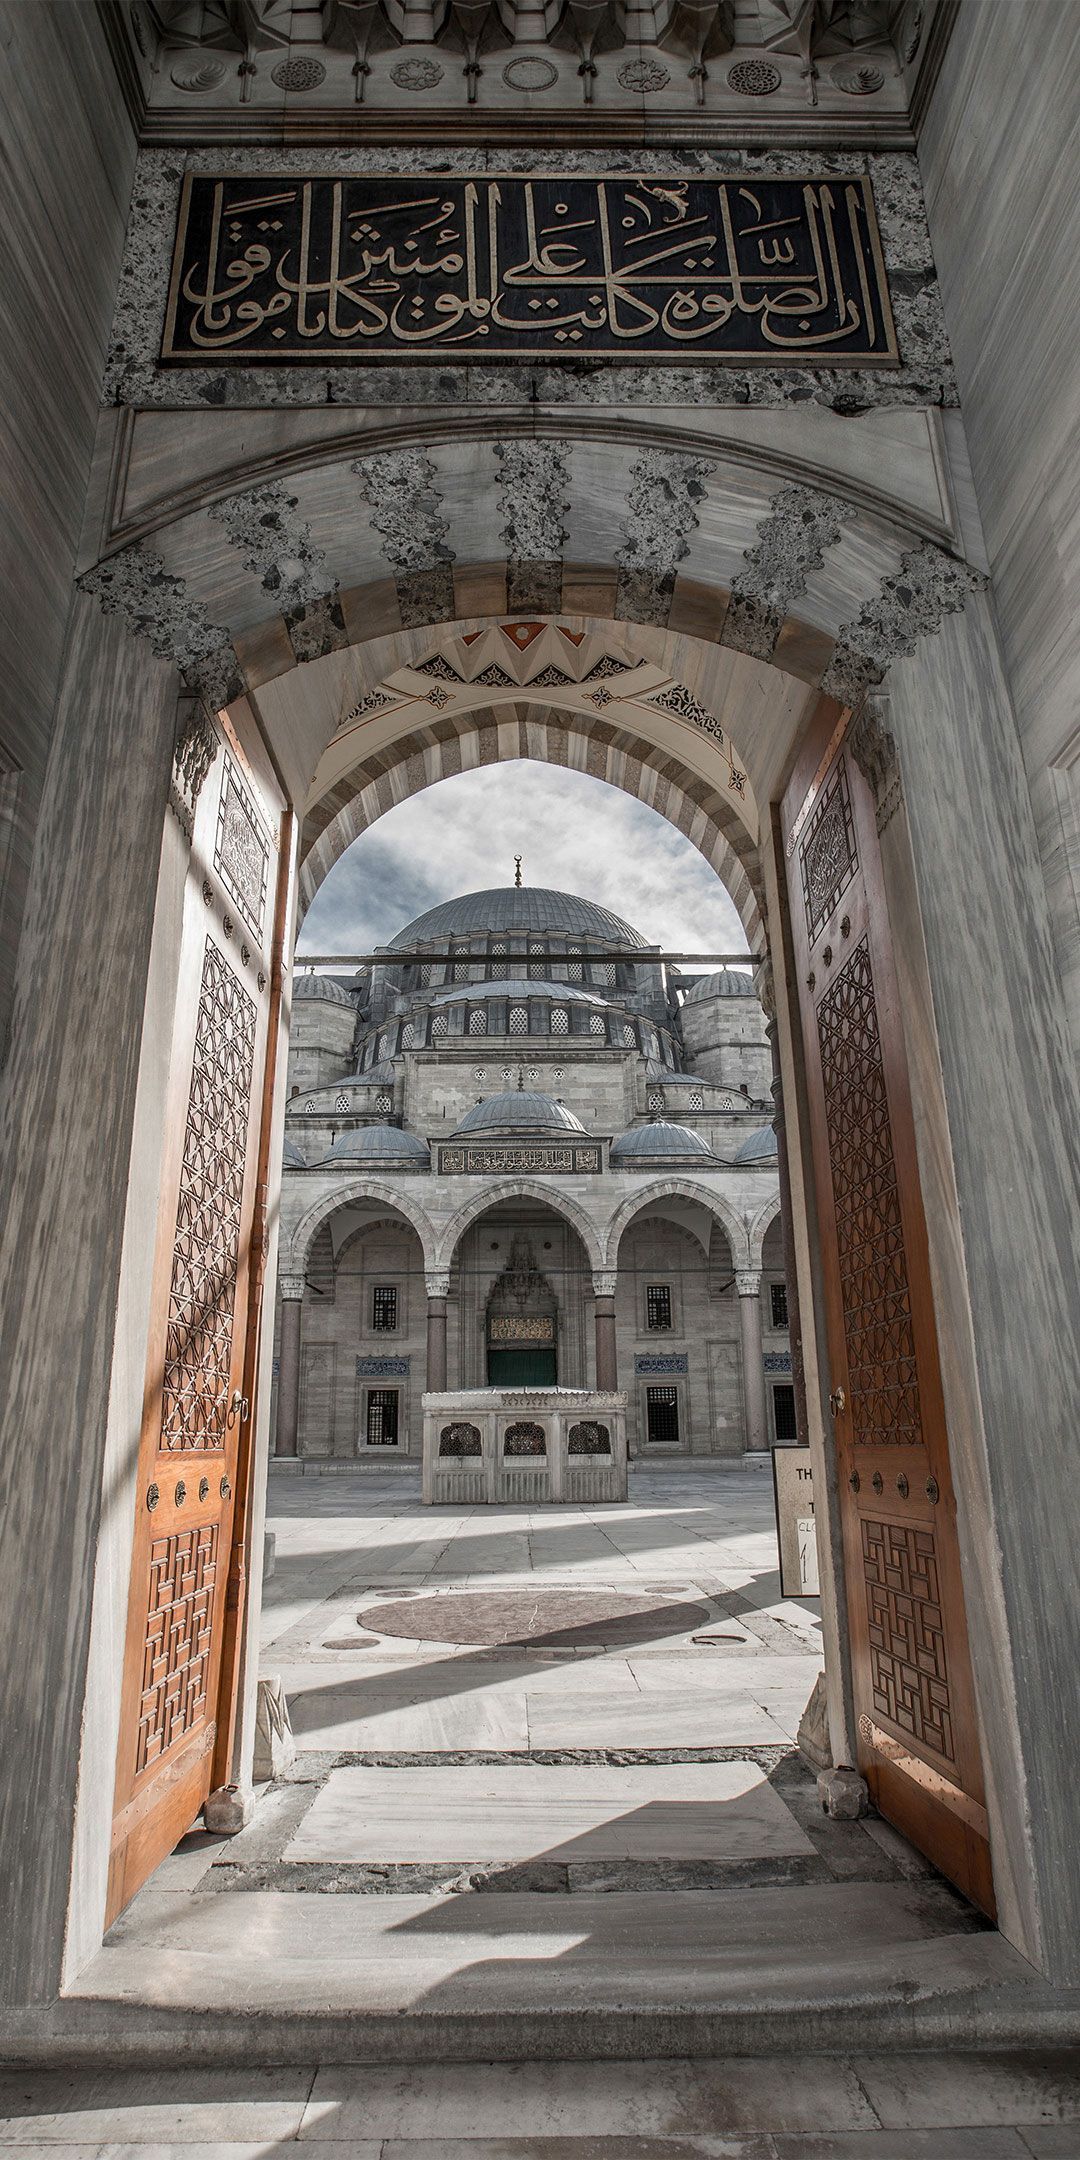 Location: Suleymaniye Mosque, Istanbul, Turkey Photo By Zaid Abu